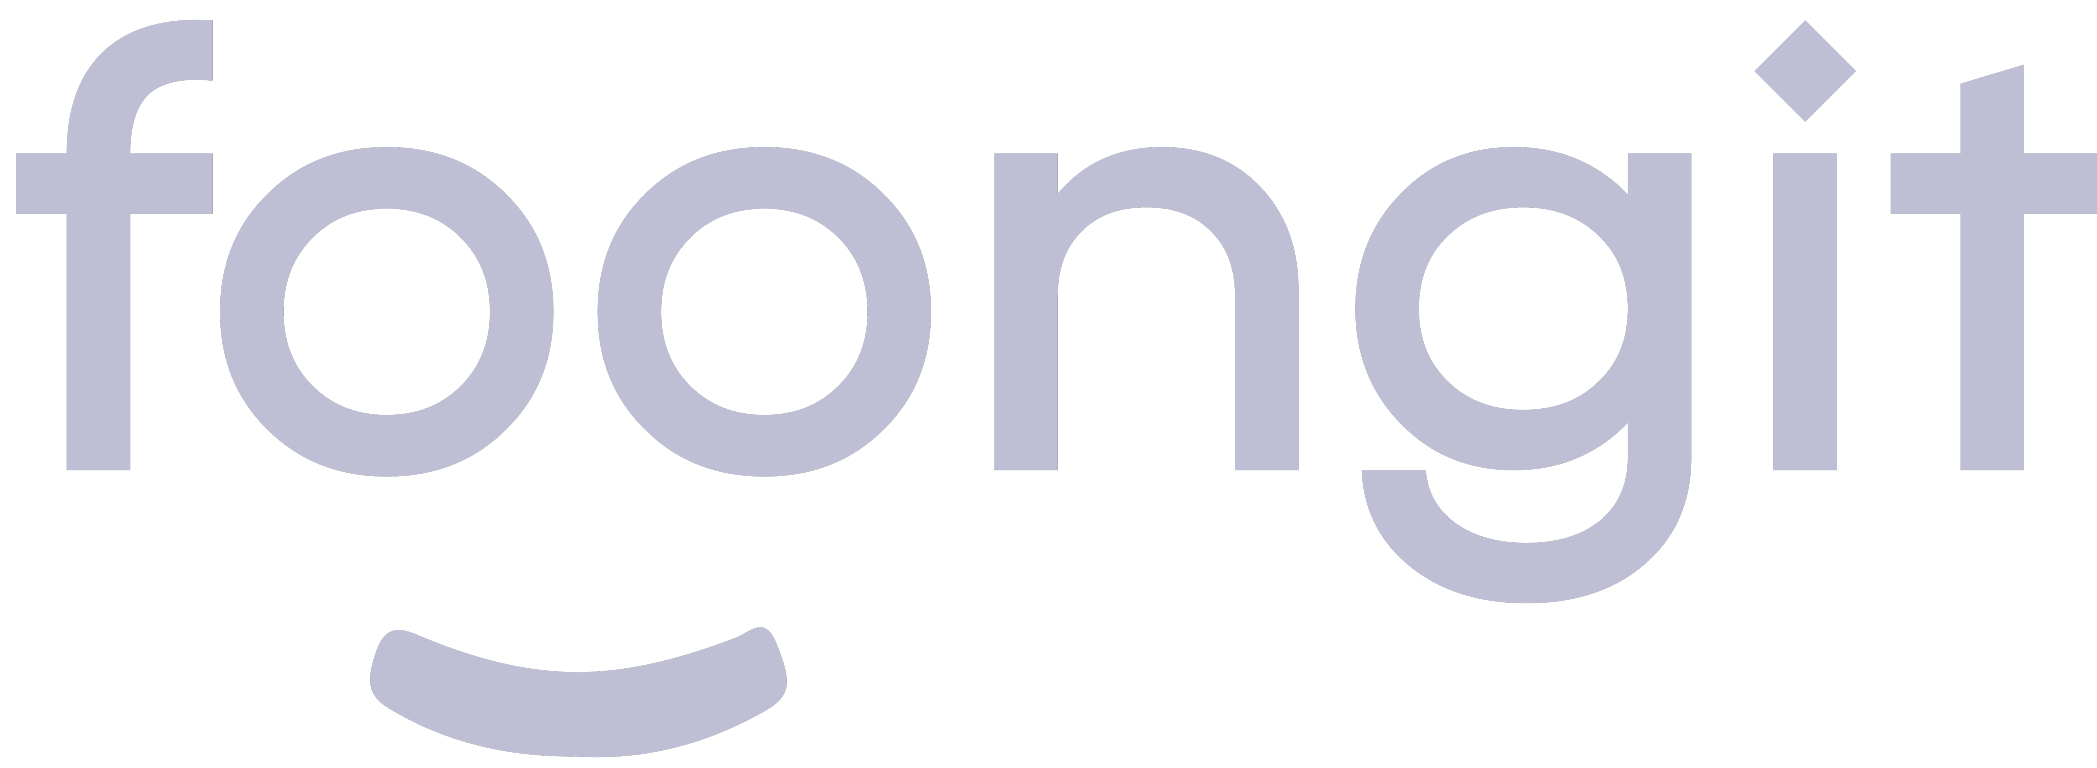 foongit logo